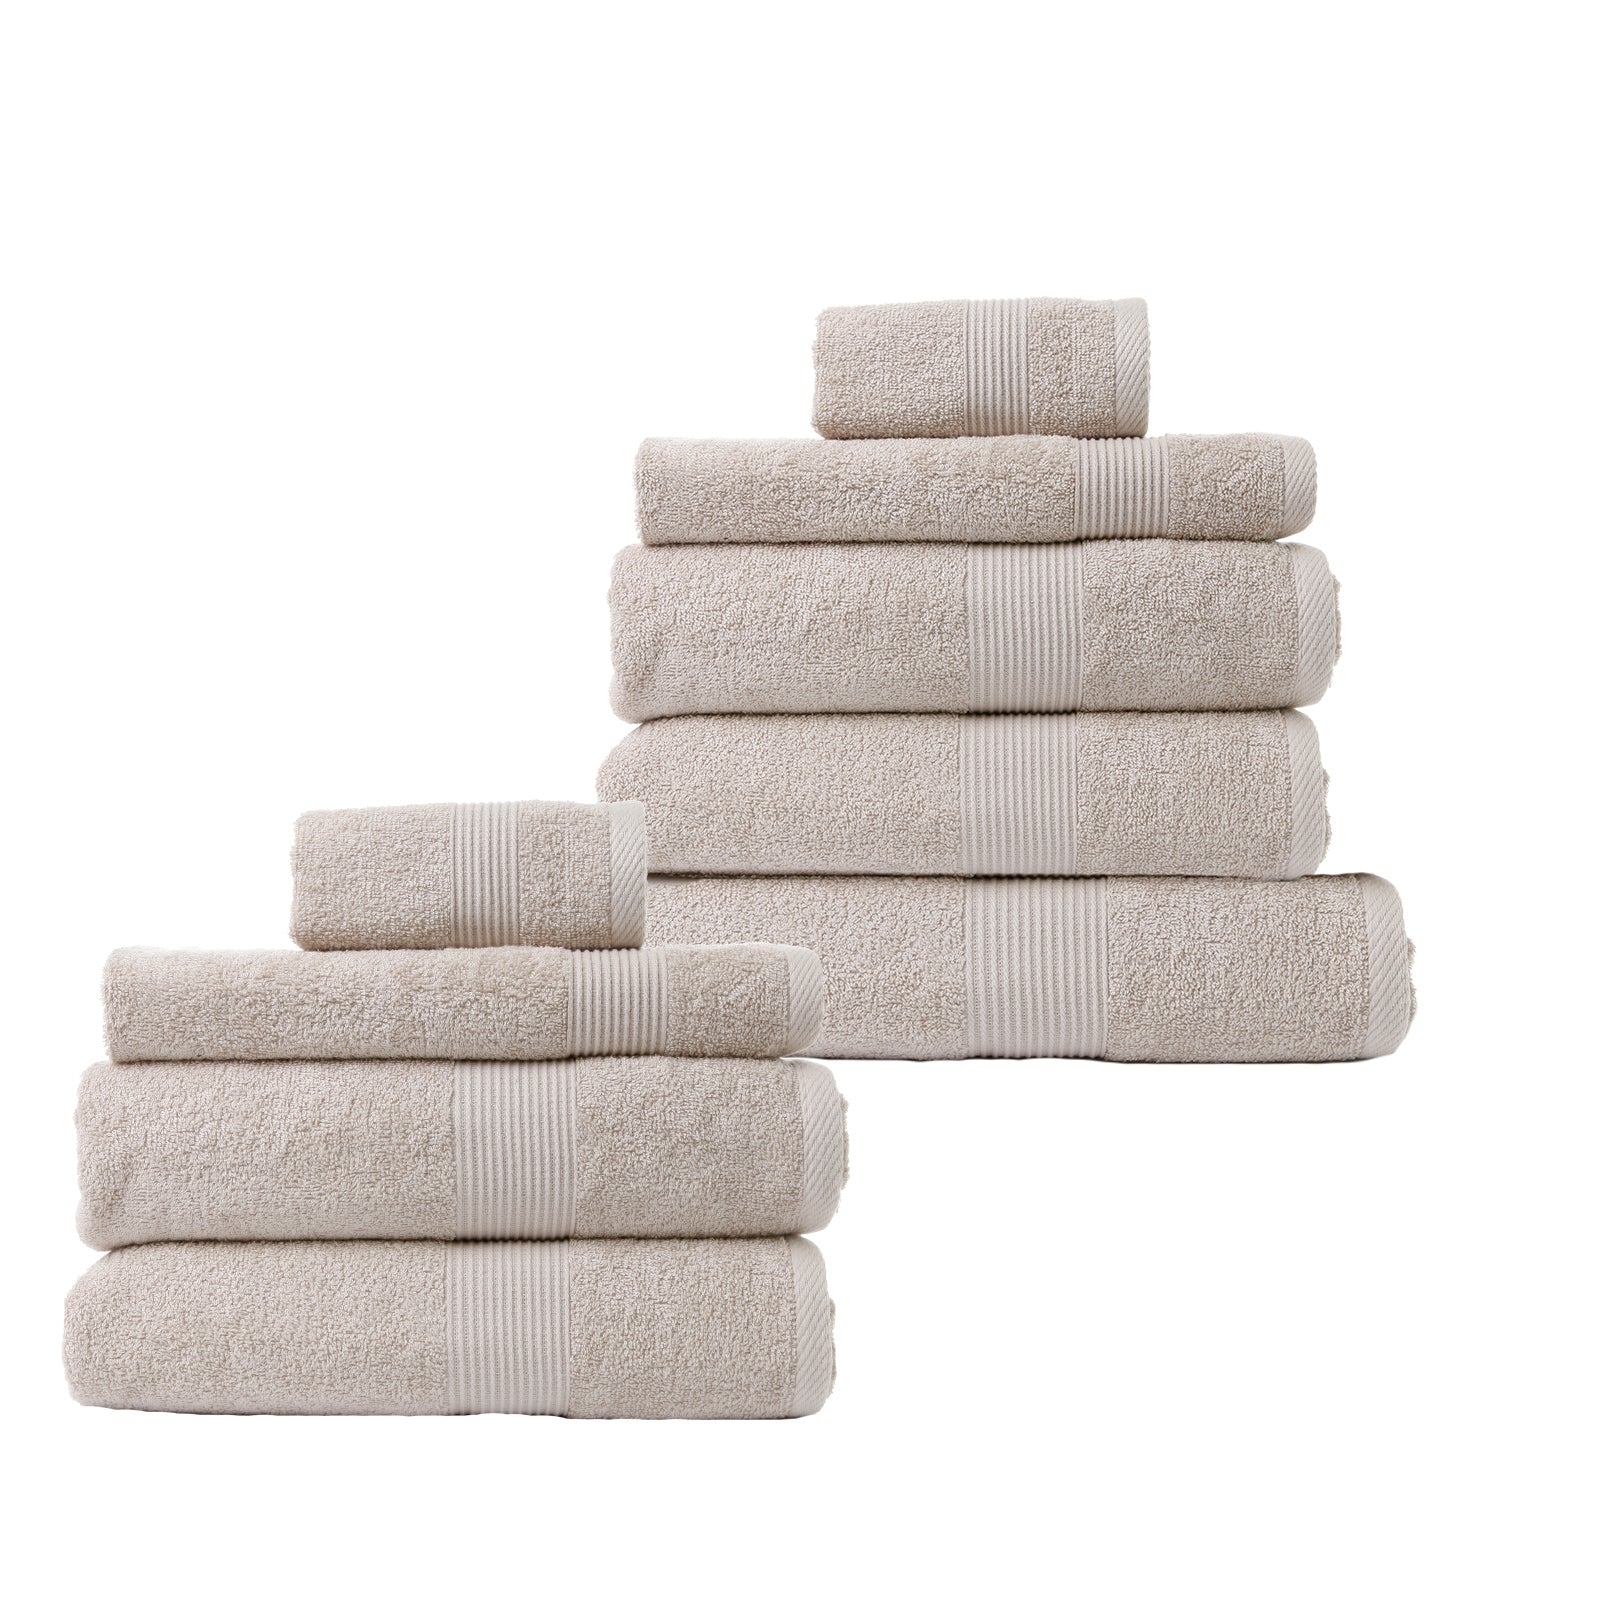 Royal Comfort 9 Piece Cotton Bamboo Towel Bundle Set 450GSM Luxurious Absorbent - Beige-Towels-PEROZ Accessories